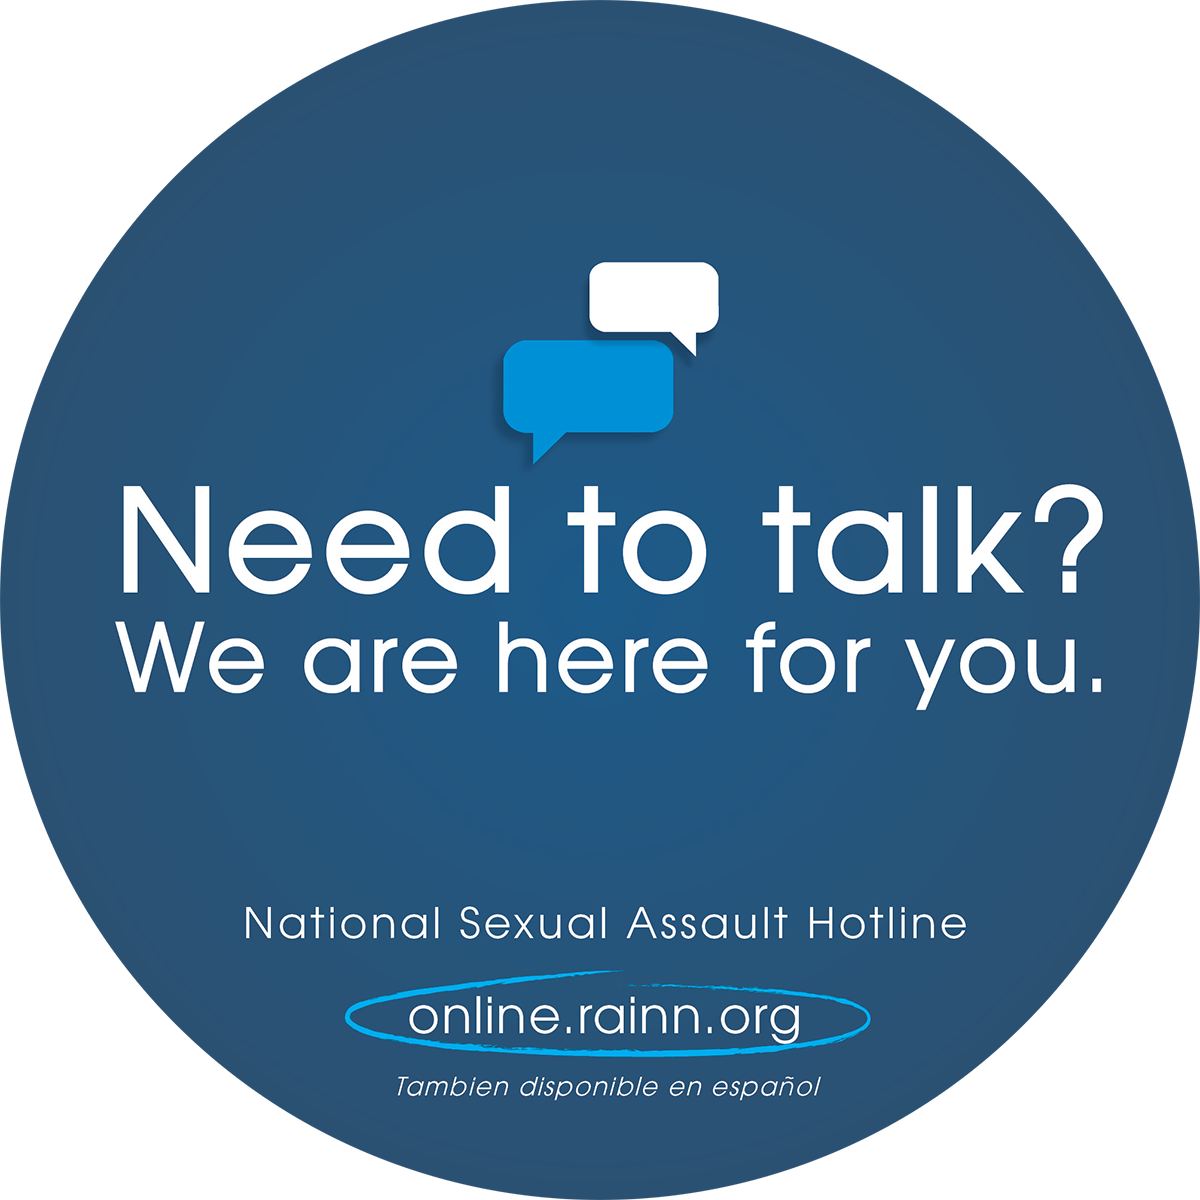 Nation Sexual Assault Hotline